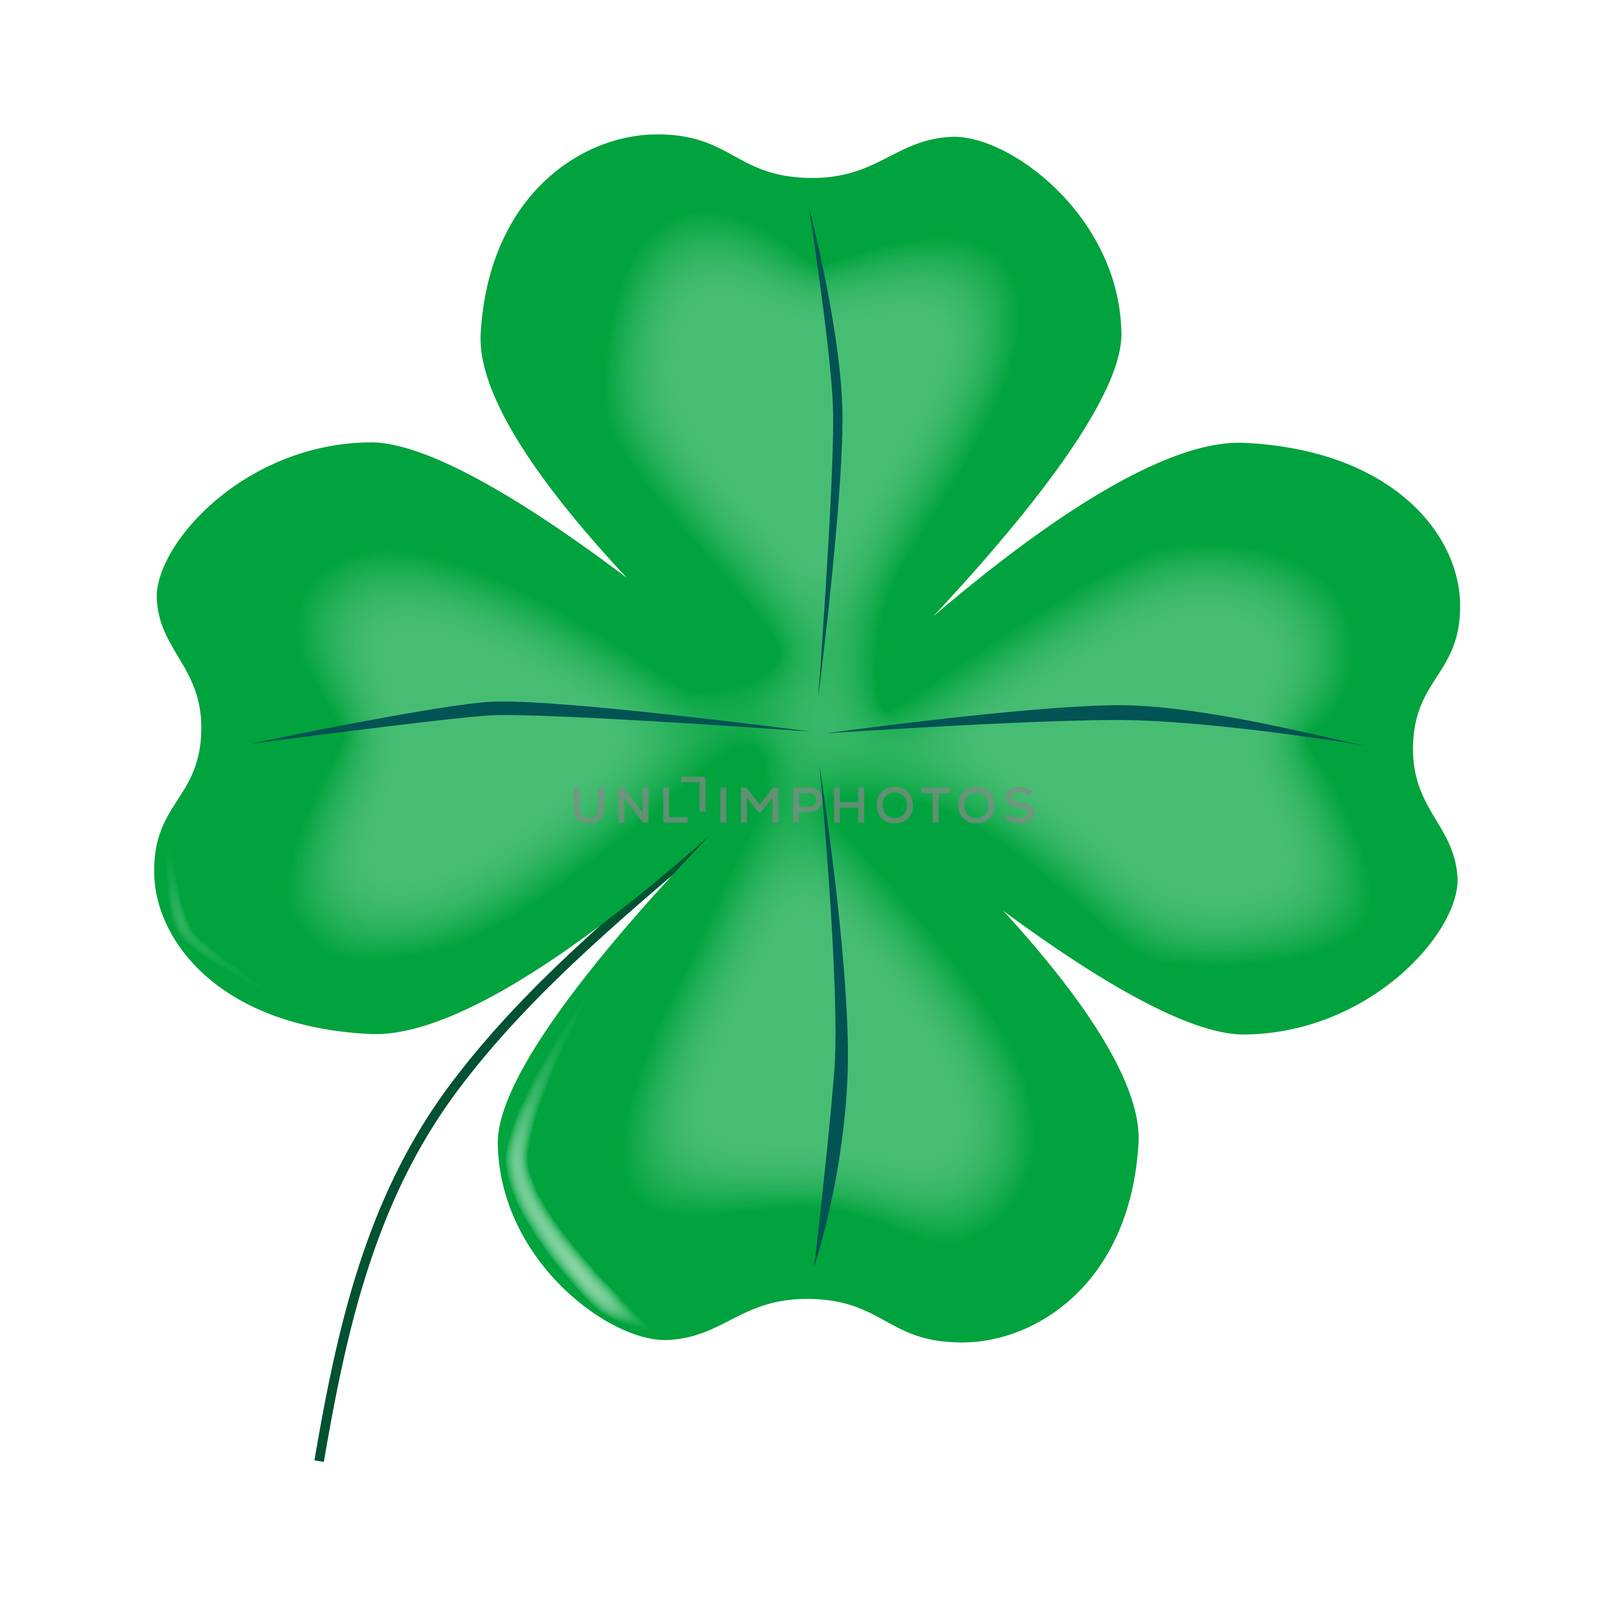 A very lucky green Irish 4 leaf shamrock over white.